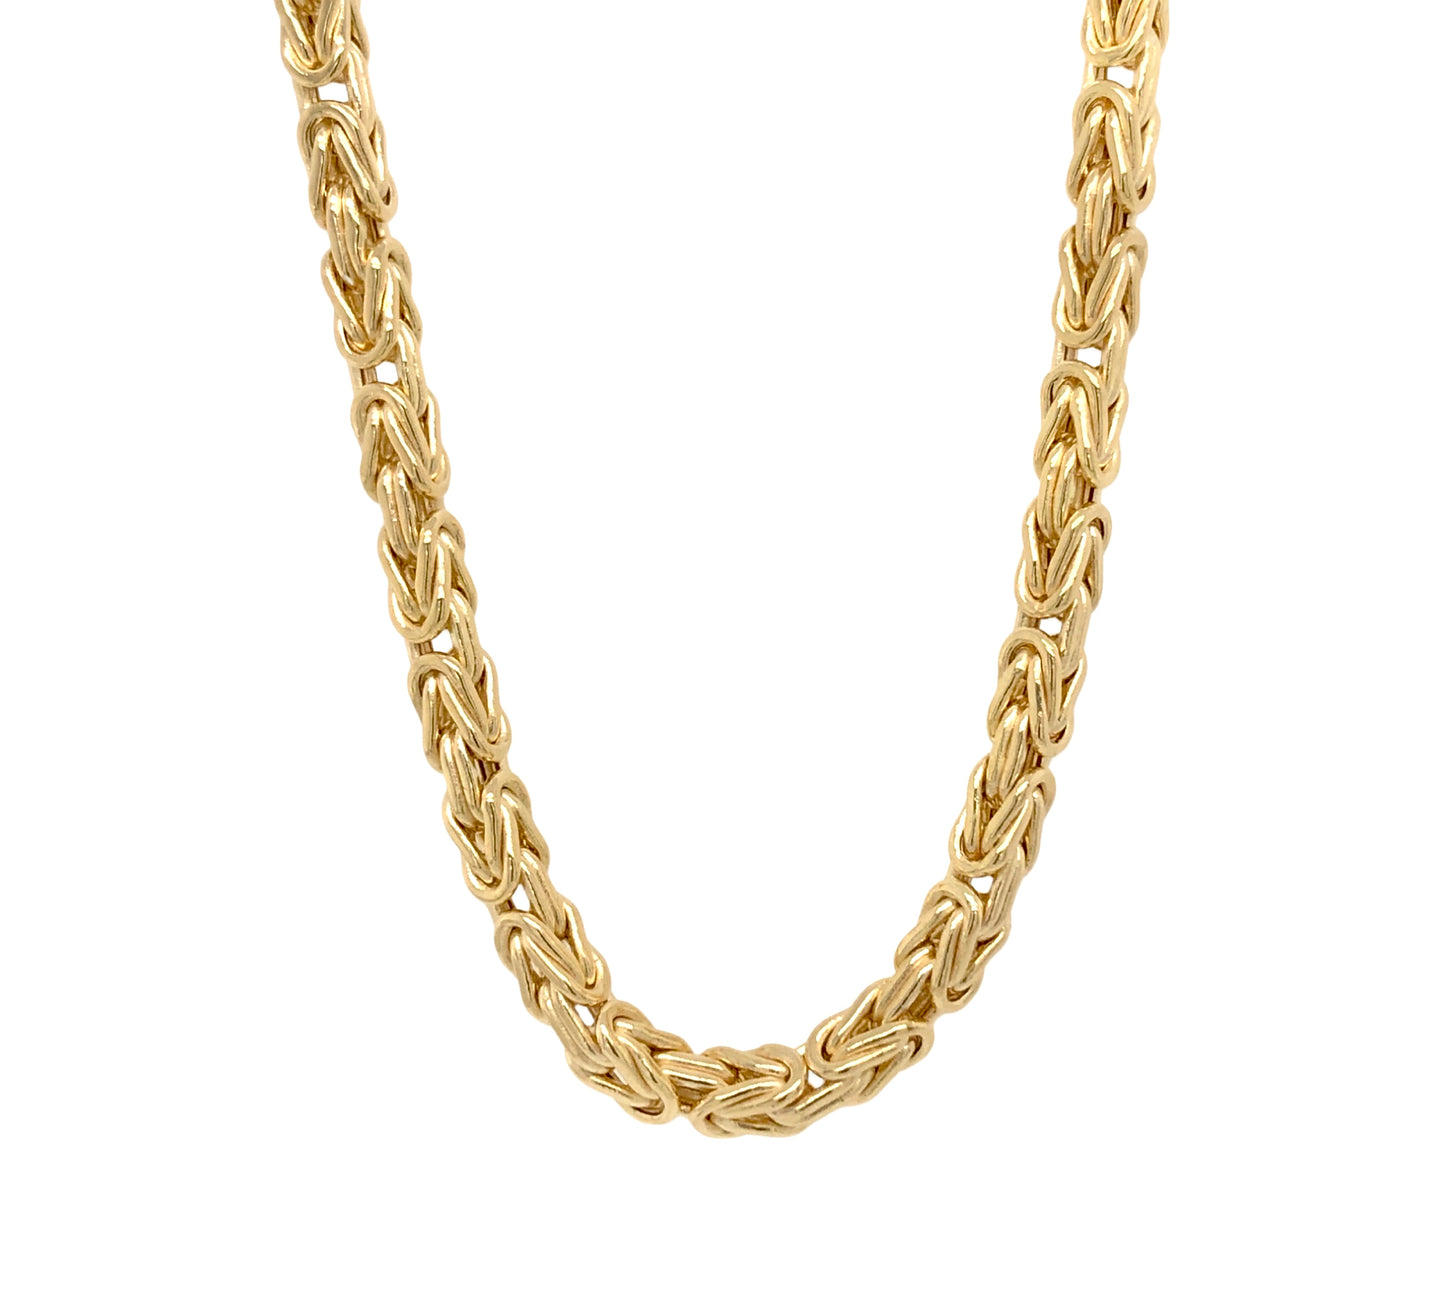 10K Yellow Gold Byzantine Chain - Hip-hop Jewelry